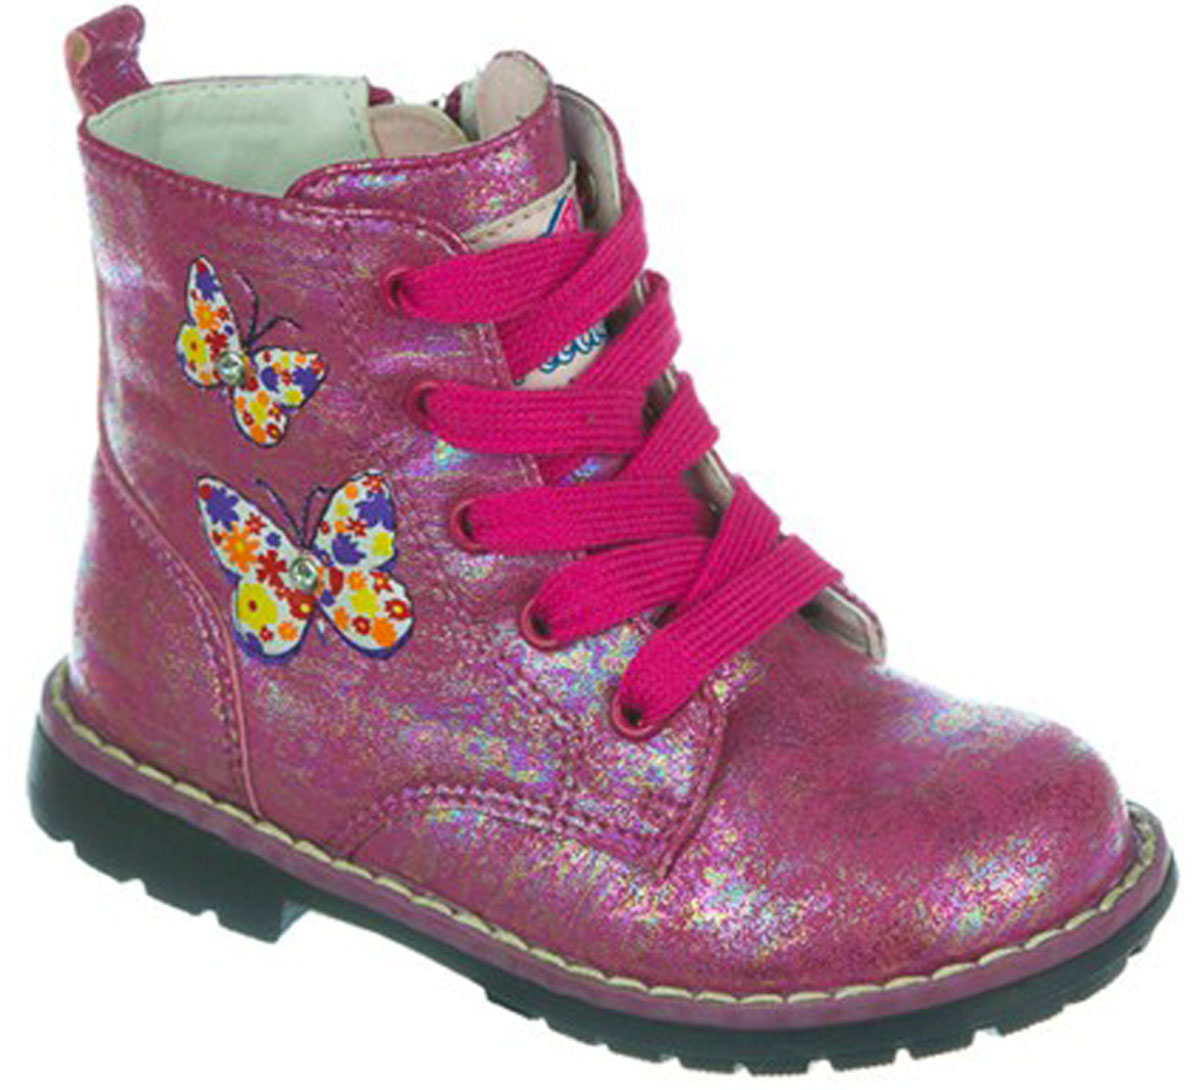 Ботинки для девочки Indigo Kids, цвет: фуксия. 51-293A/12. Размер 24